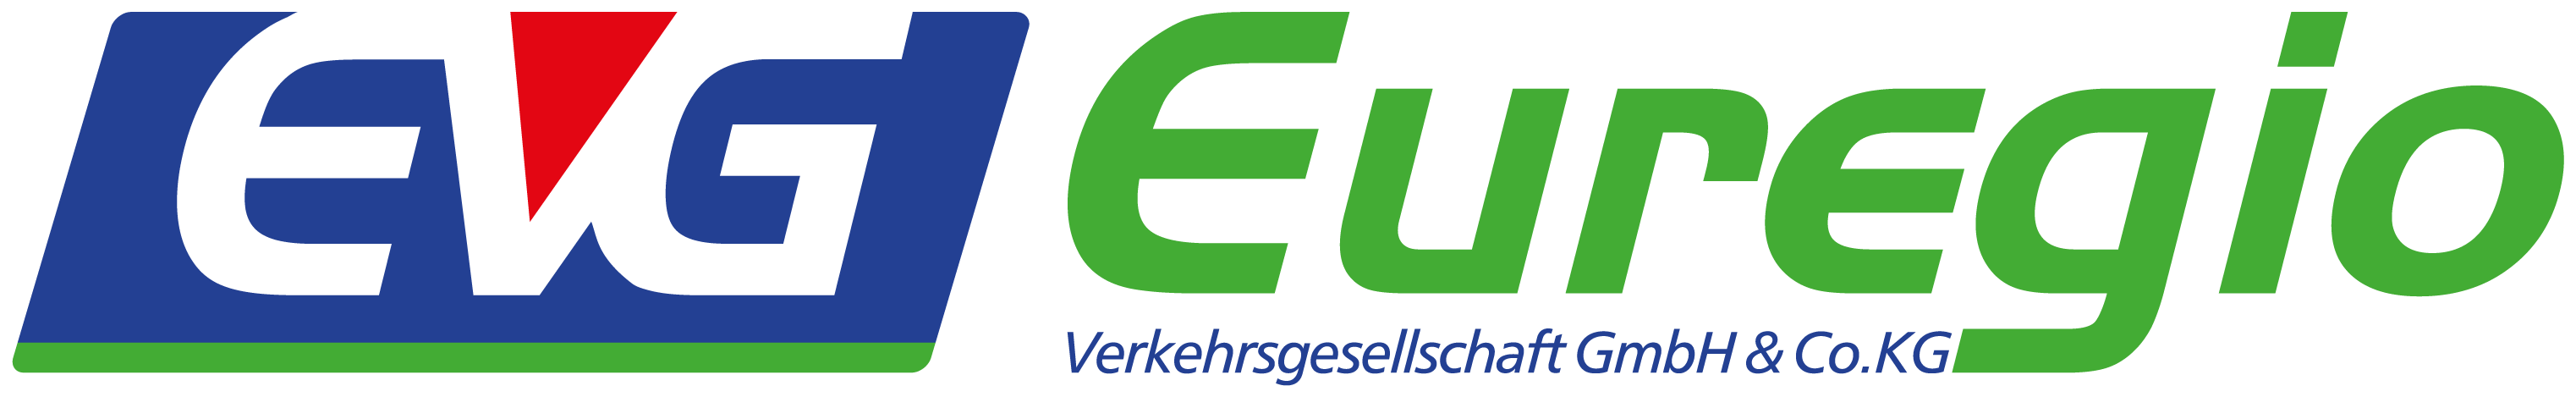 EVG - Euregio-Verkehrsgesellschaft